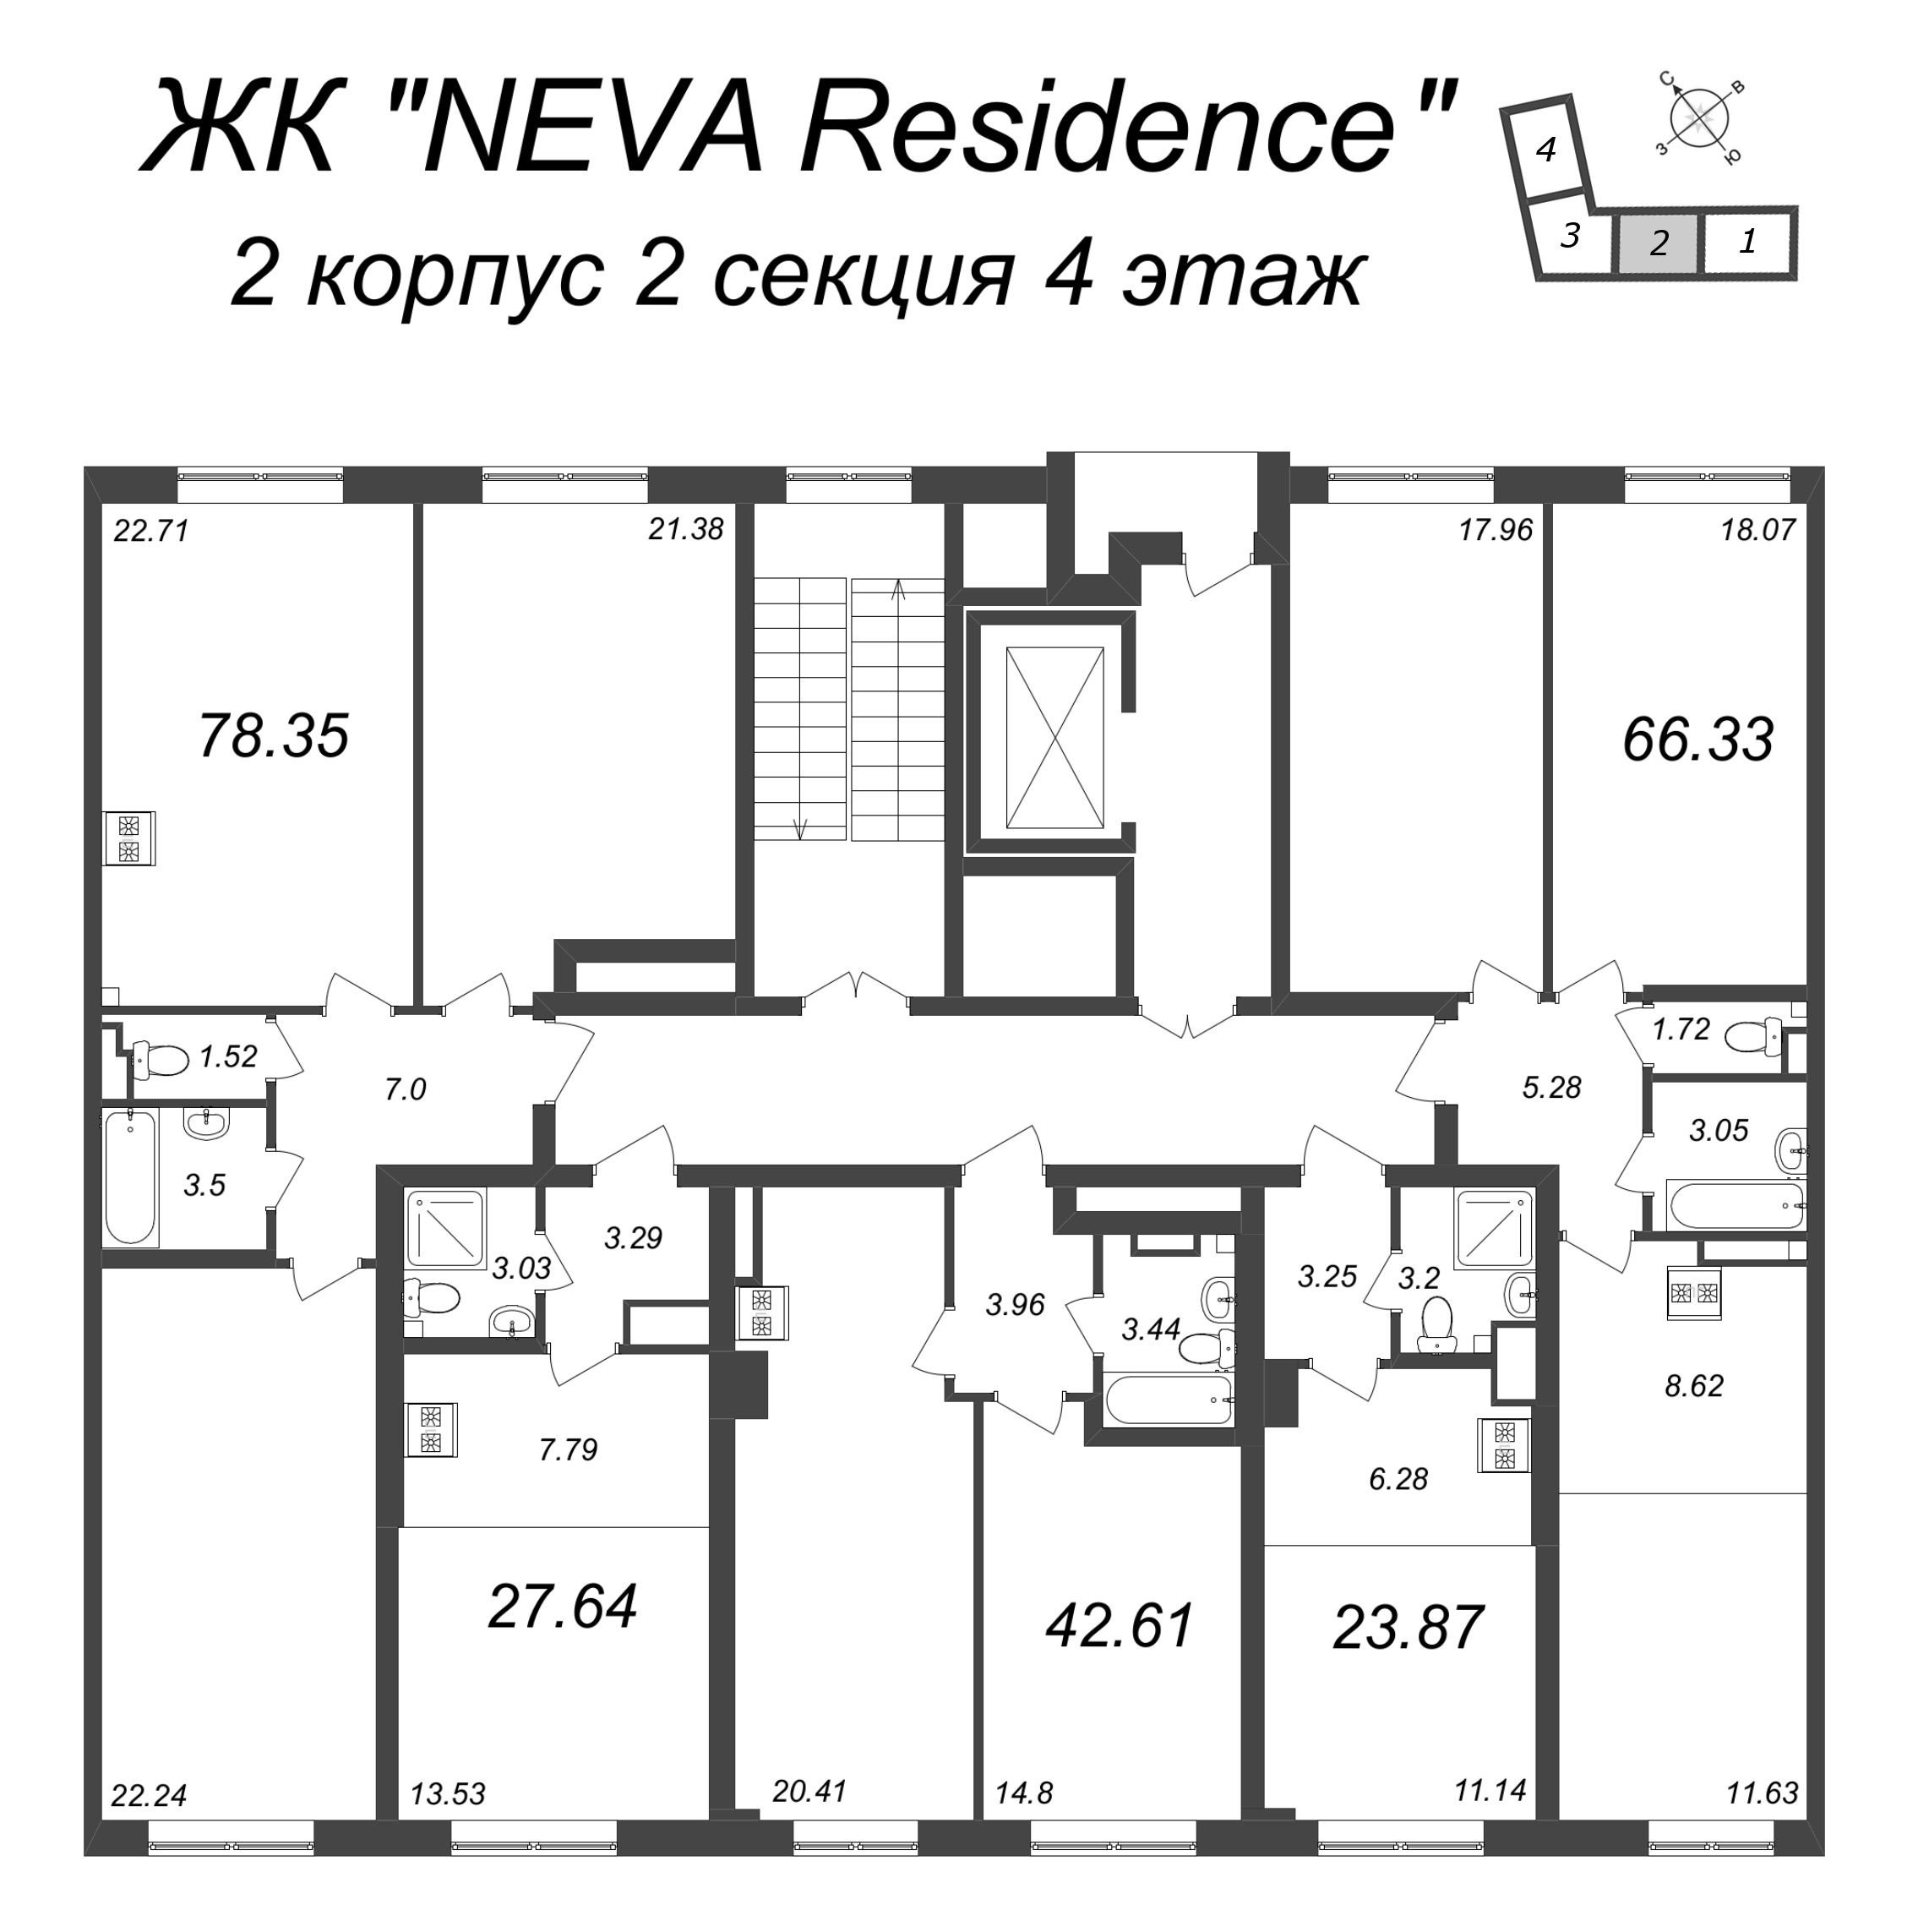 2-комнатная (Евро) квартира, 42.61 м² - планировка этажа